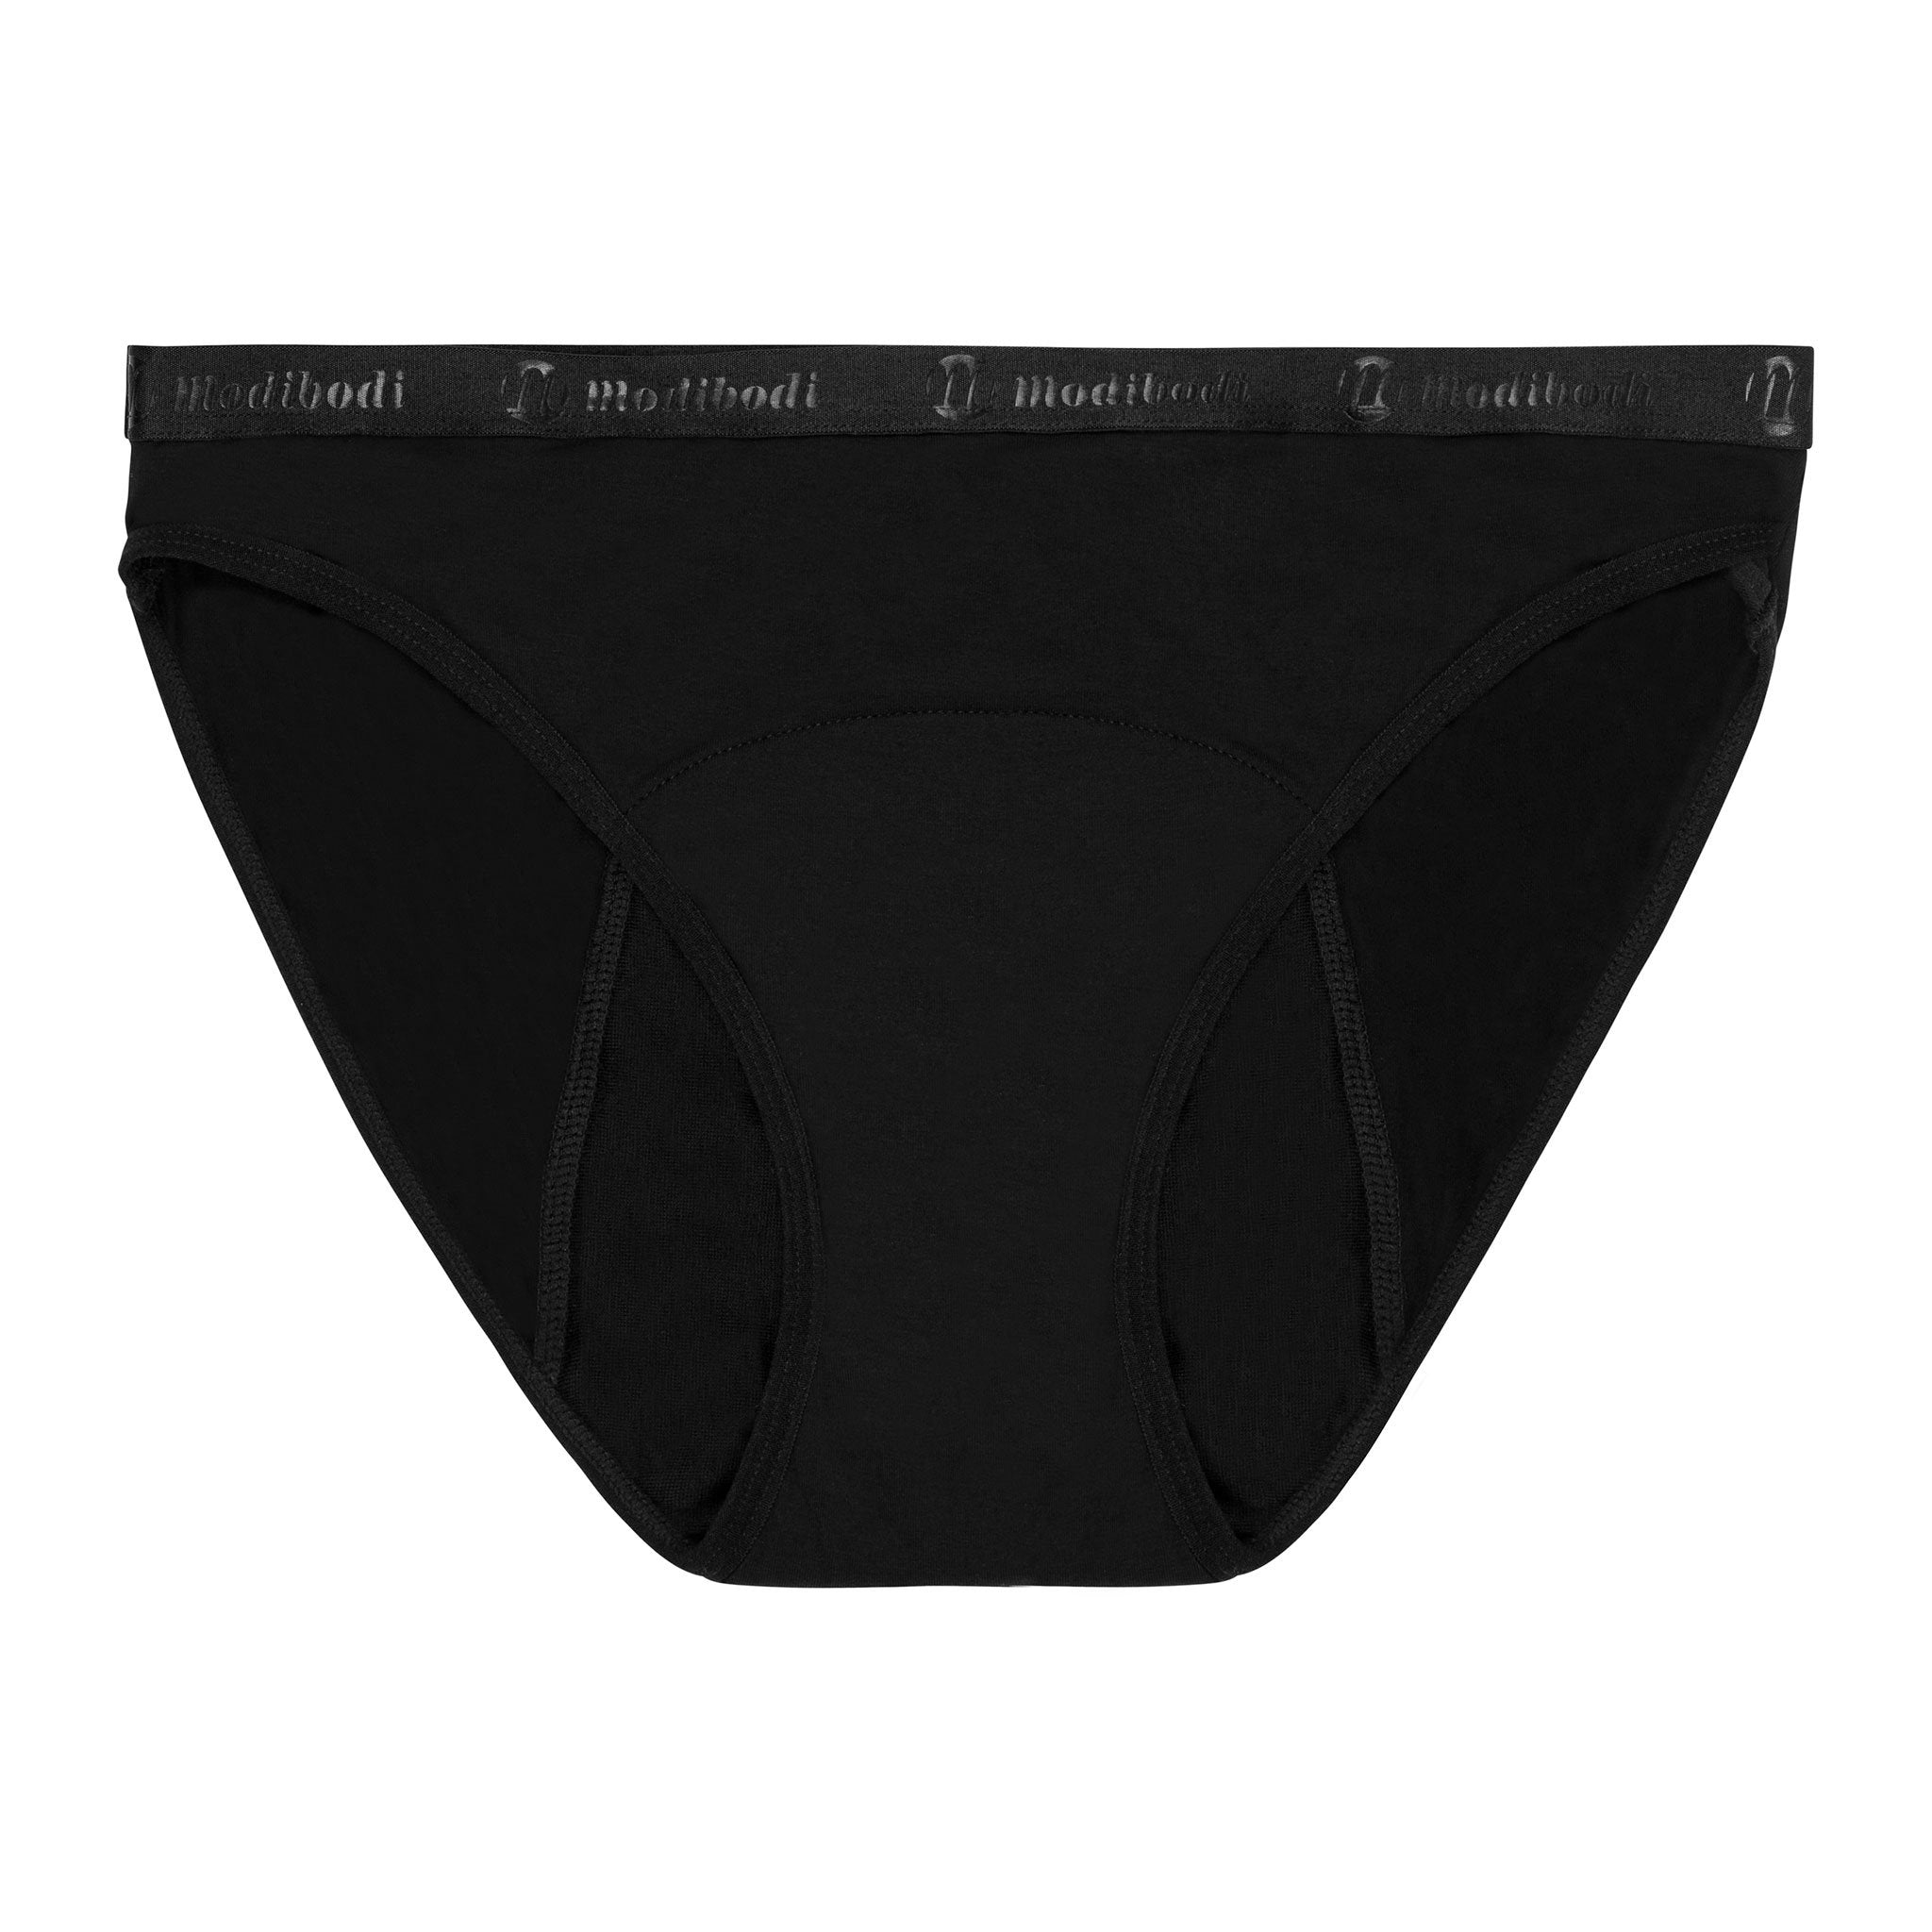 Modibodi - Period Underwear That Really Works! – The Period Co.